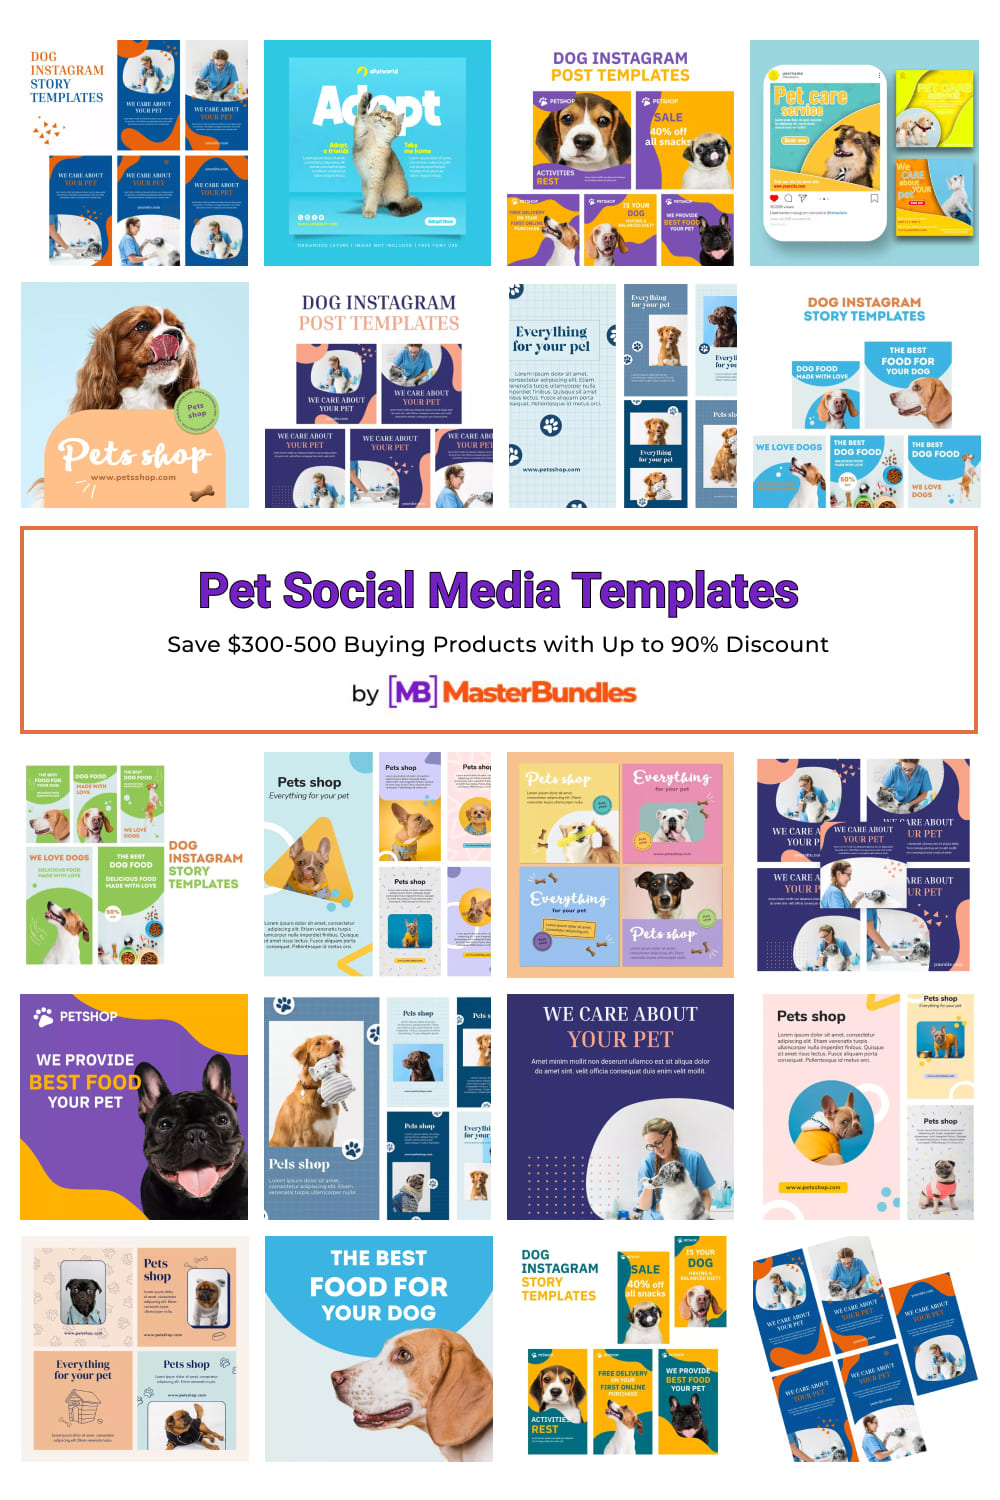 Pet Social Media Templates for Pinterest.